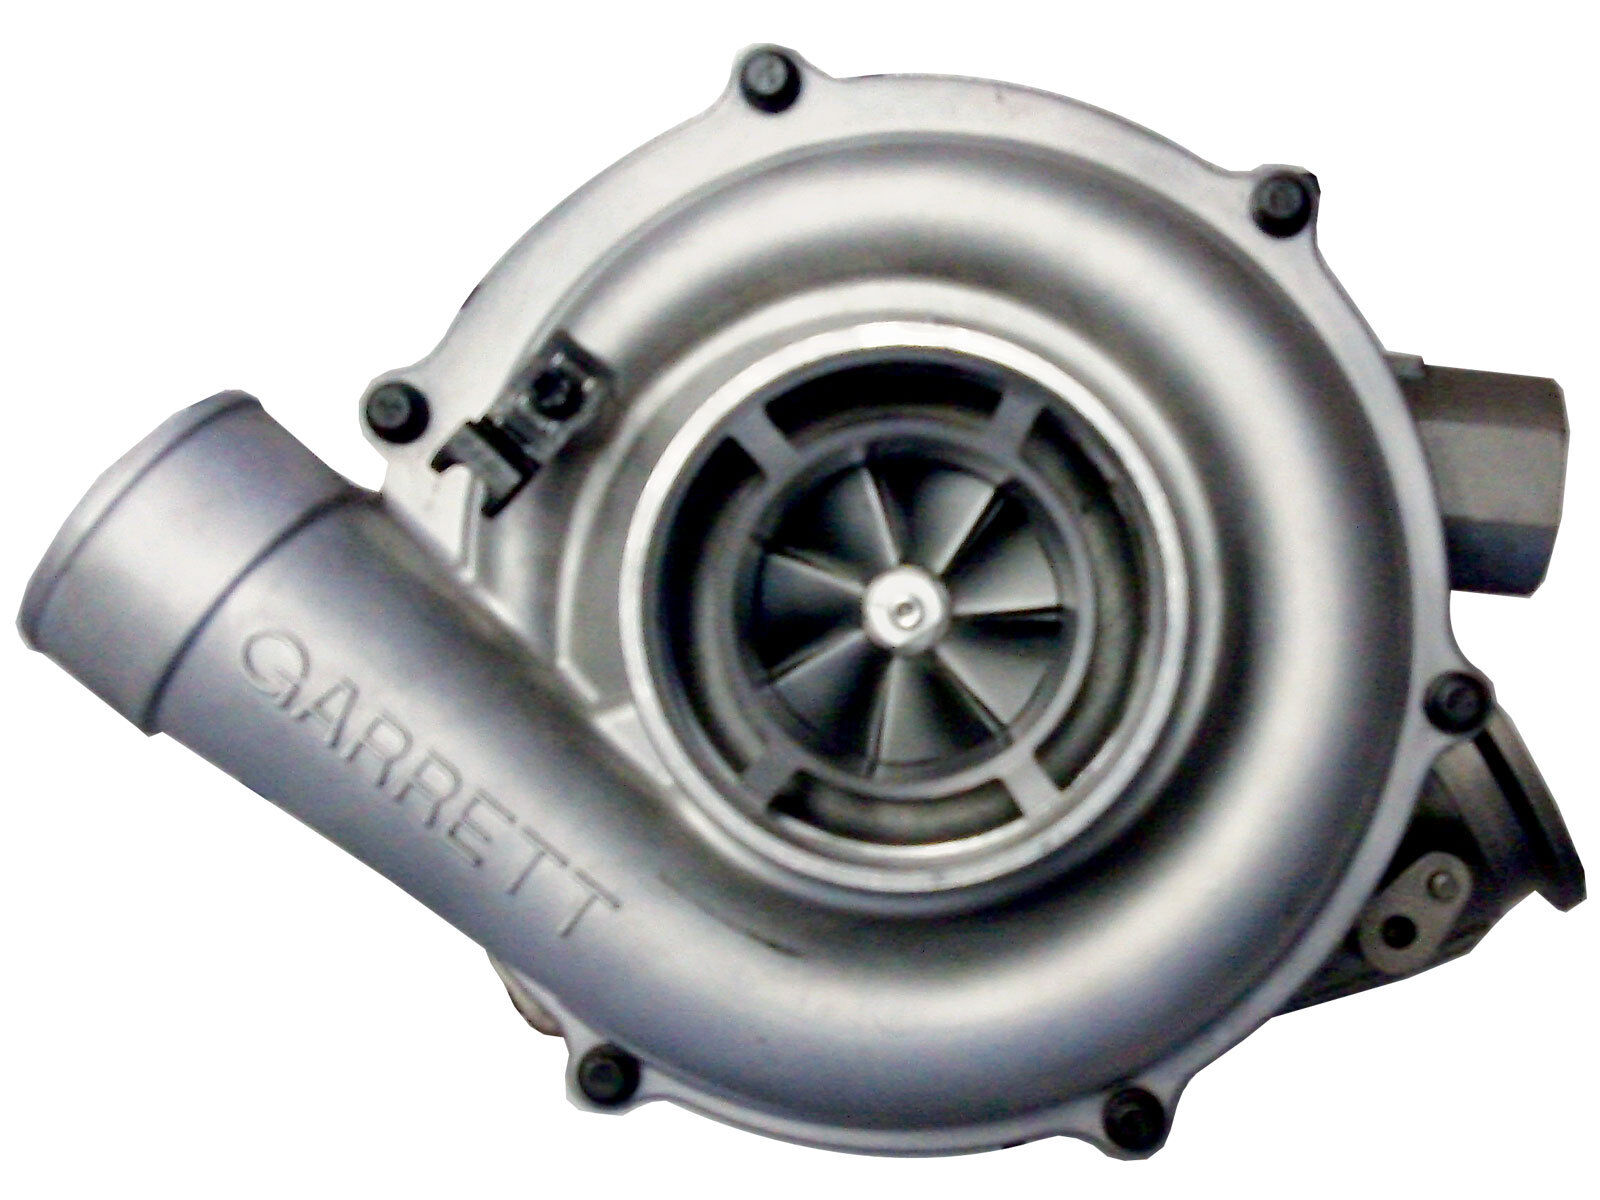 1995-2003 7.3 POWERSTROKE BIGBOOST turbo upgrade MPG aftermarket performance